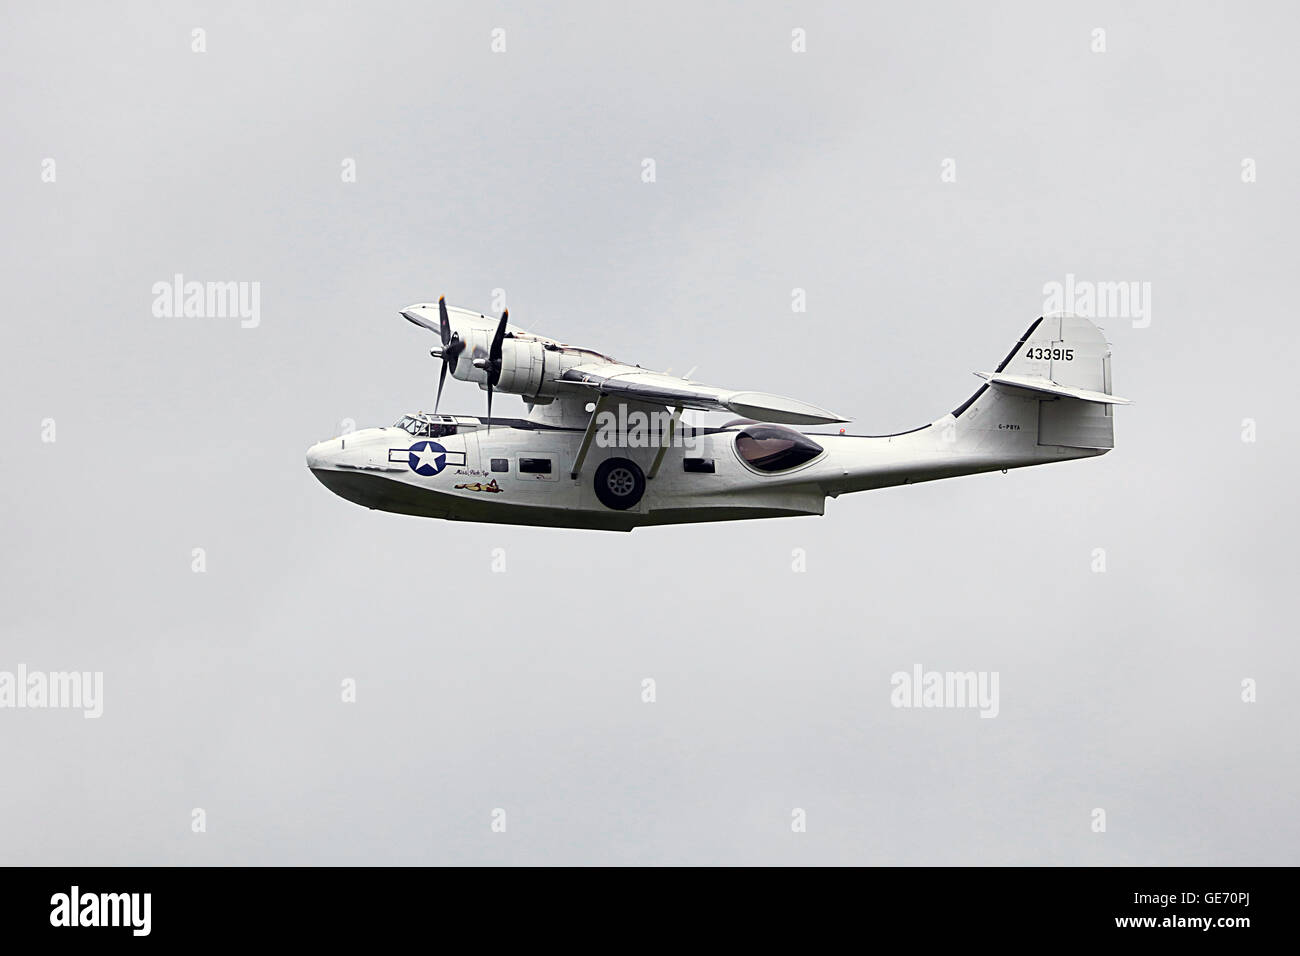 The Catalina flying boat at Scotland's Airshow. UK Stock Photo